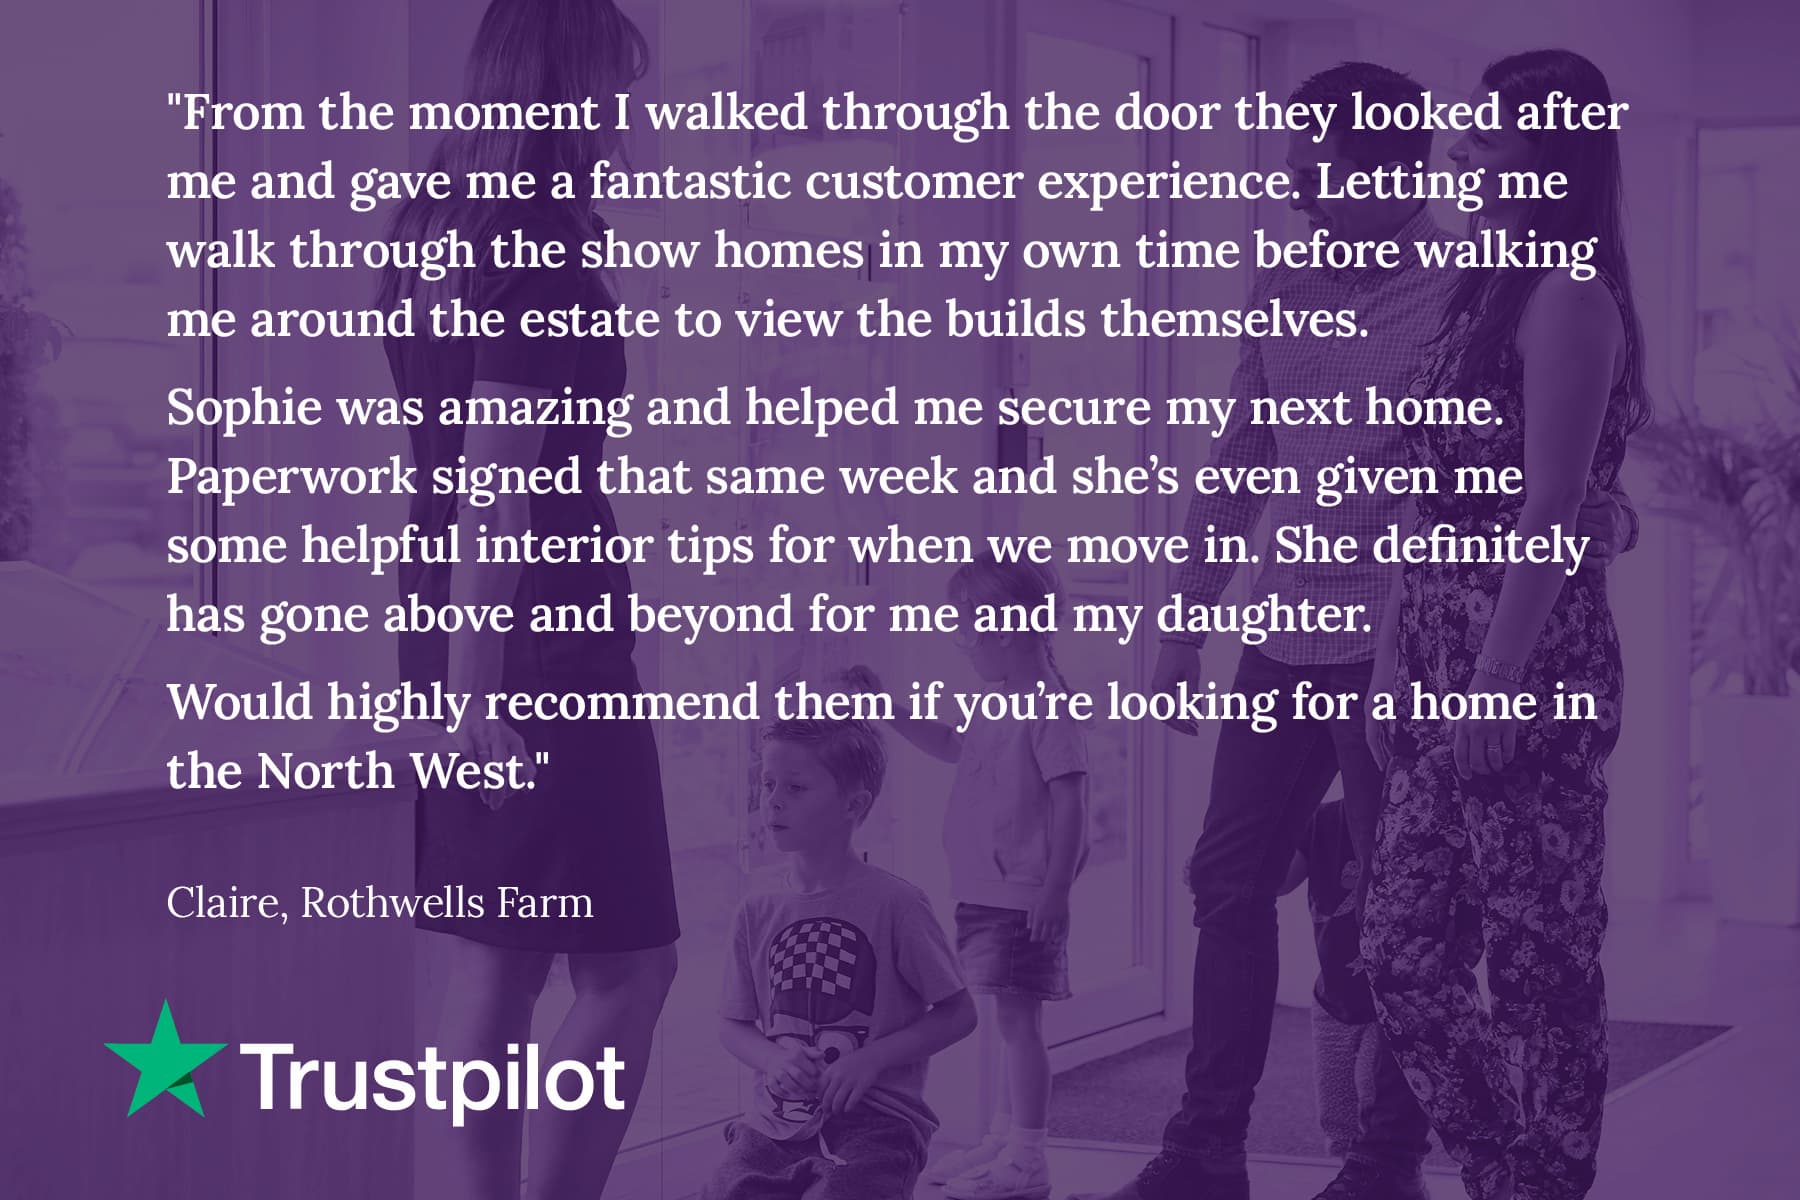 Rothwells Farm trust pilot review